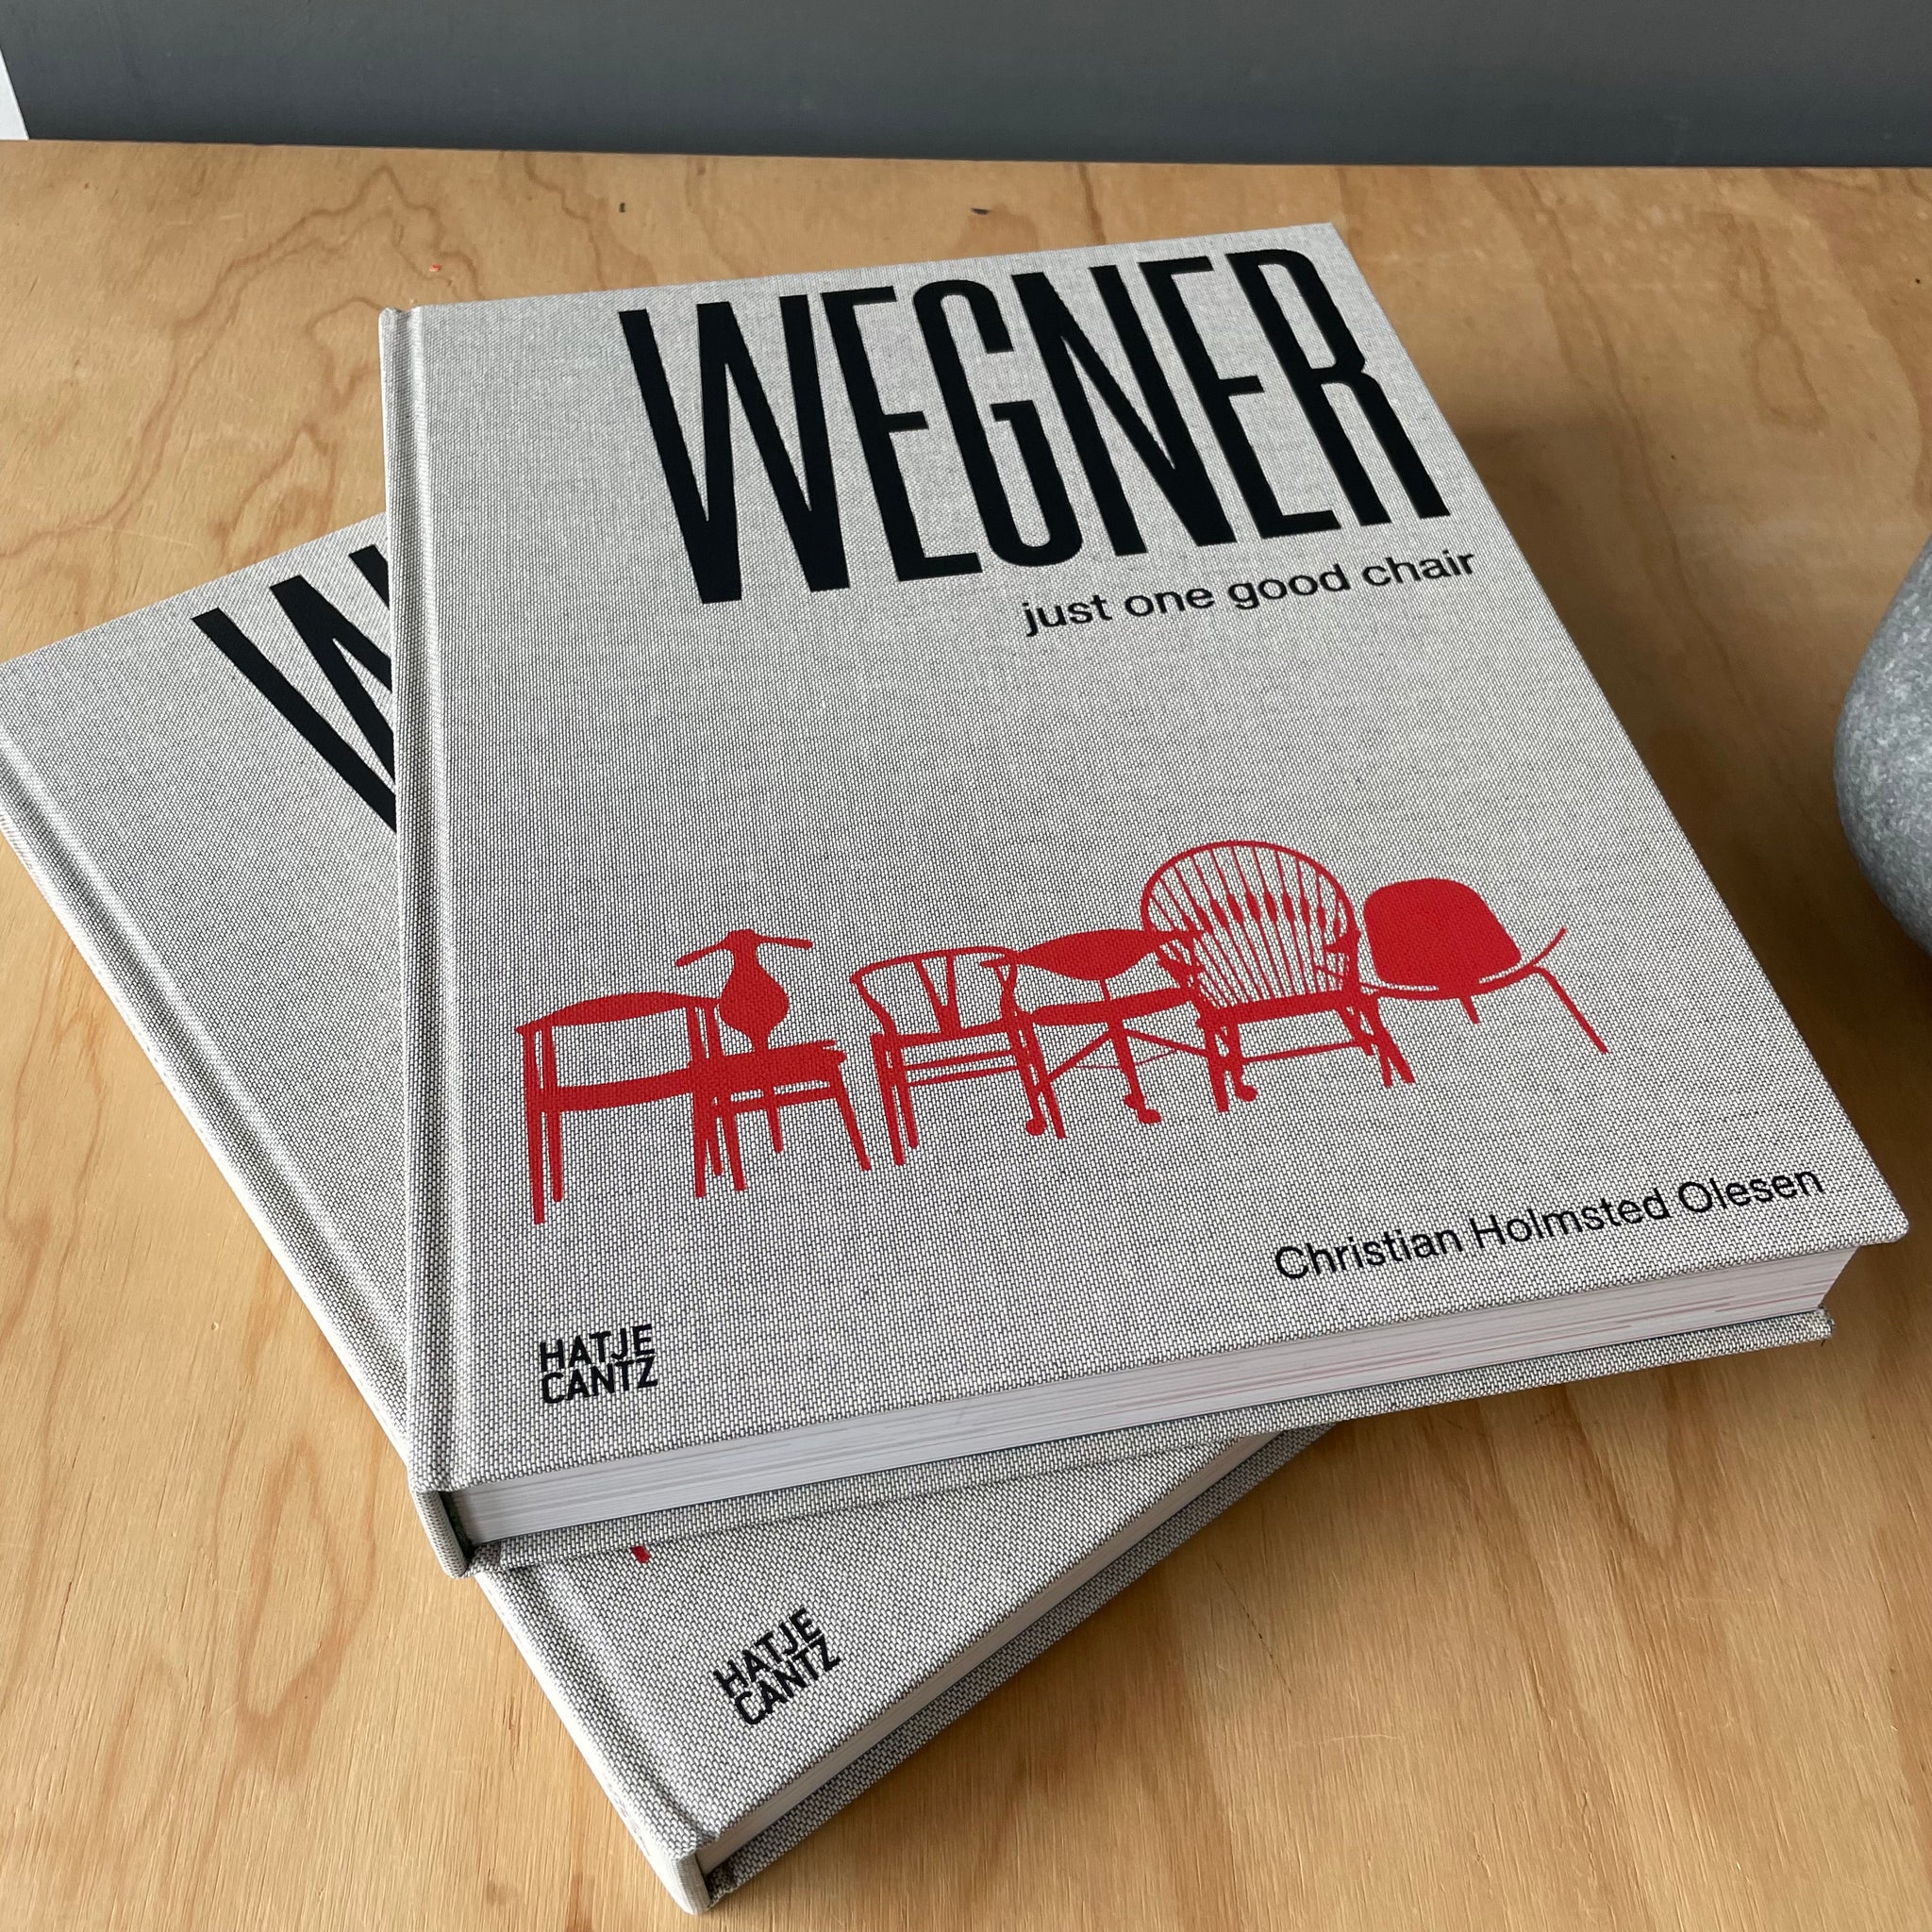 Wegner, Just One Good Chair – Upstate MN